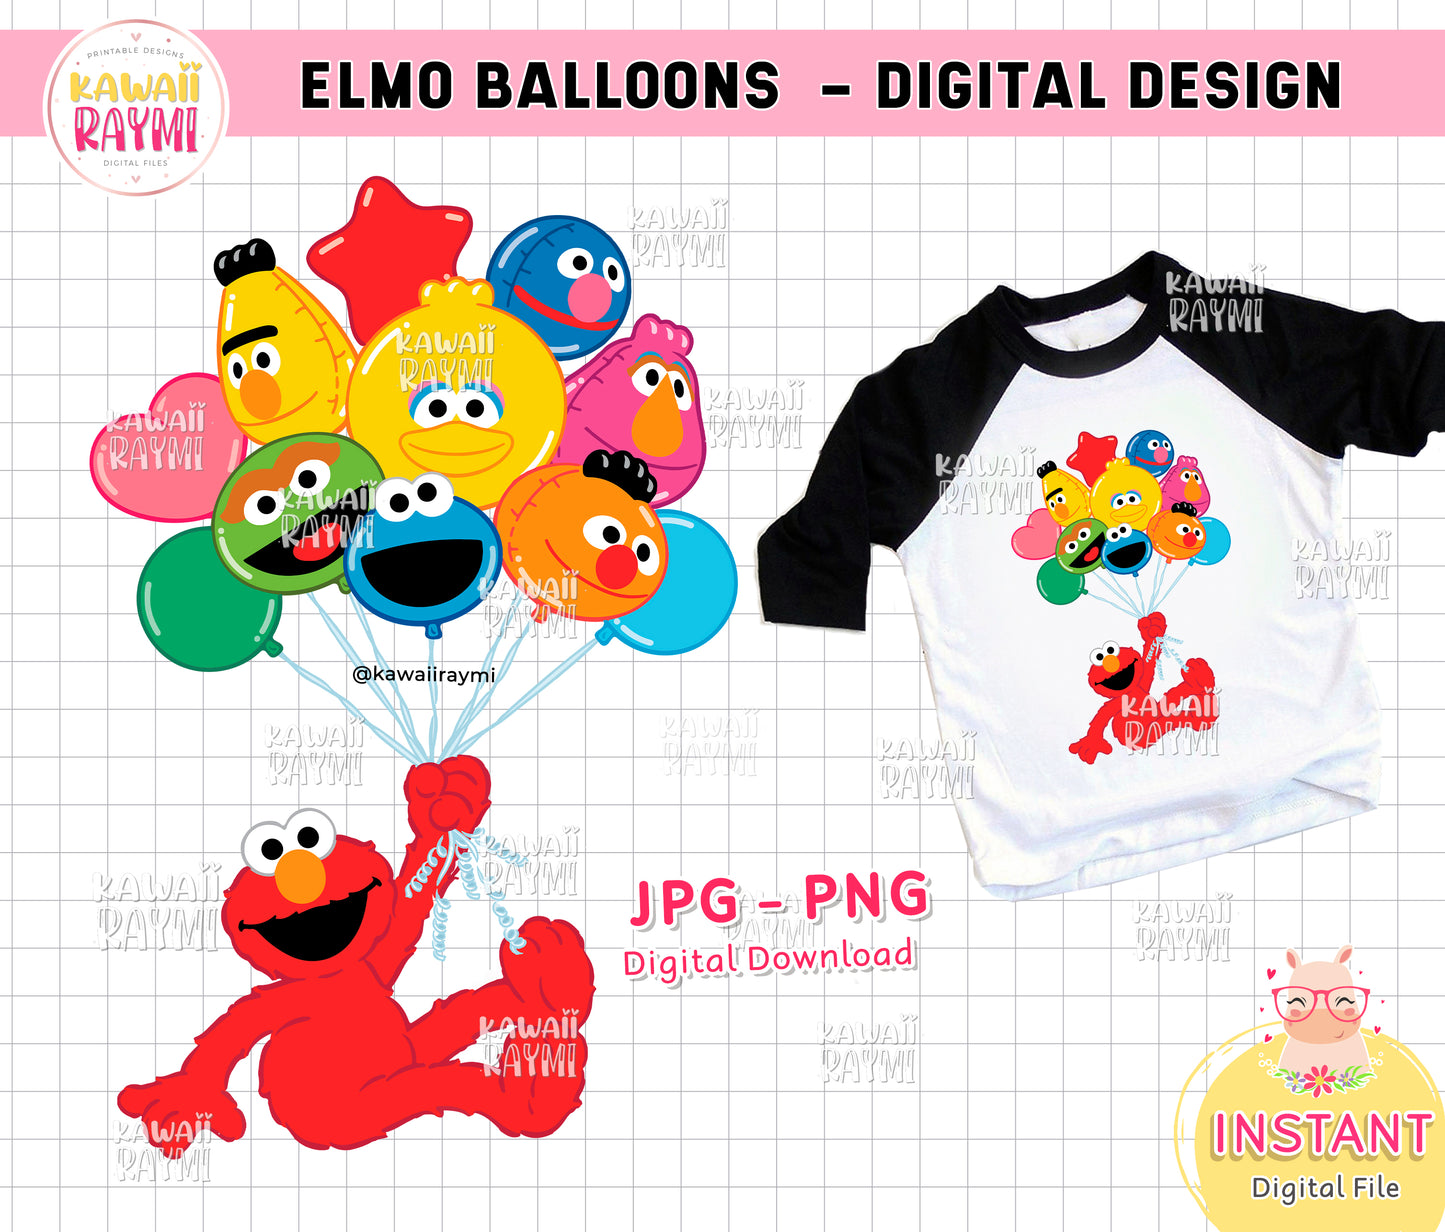 Elmo balloons clipart, Elmo and character balloons, sesame street balloons png, jpg, instant digital file, sesame street party